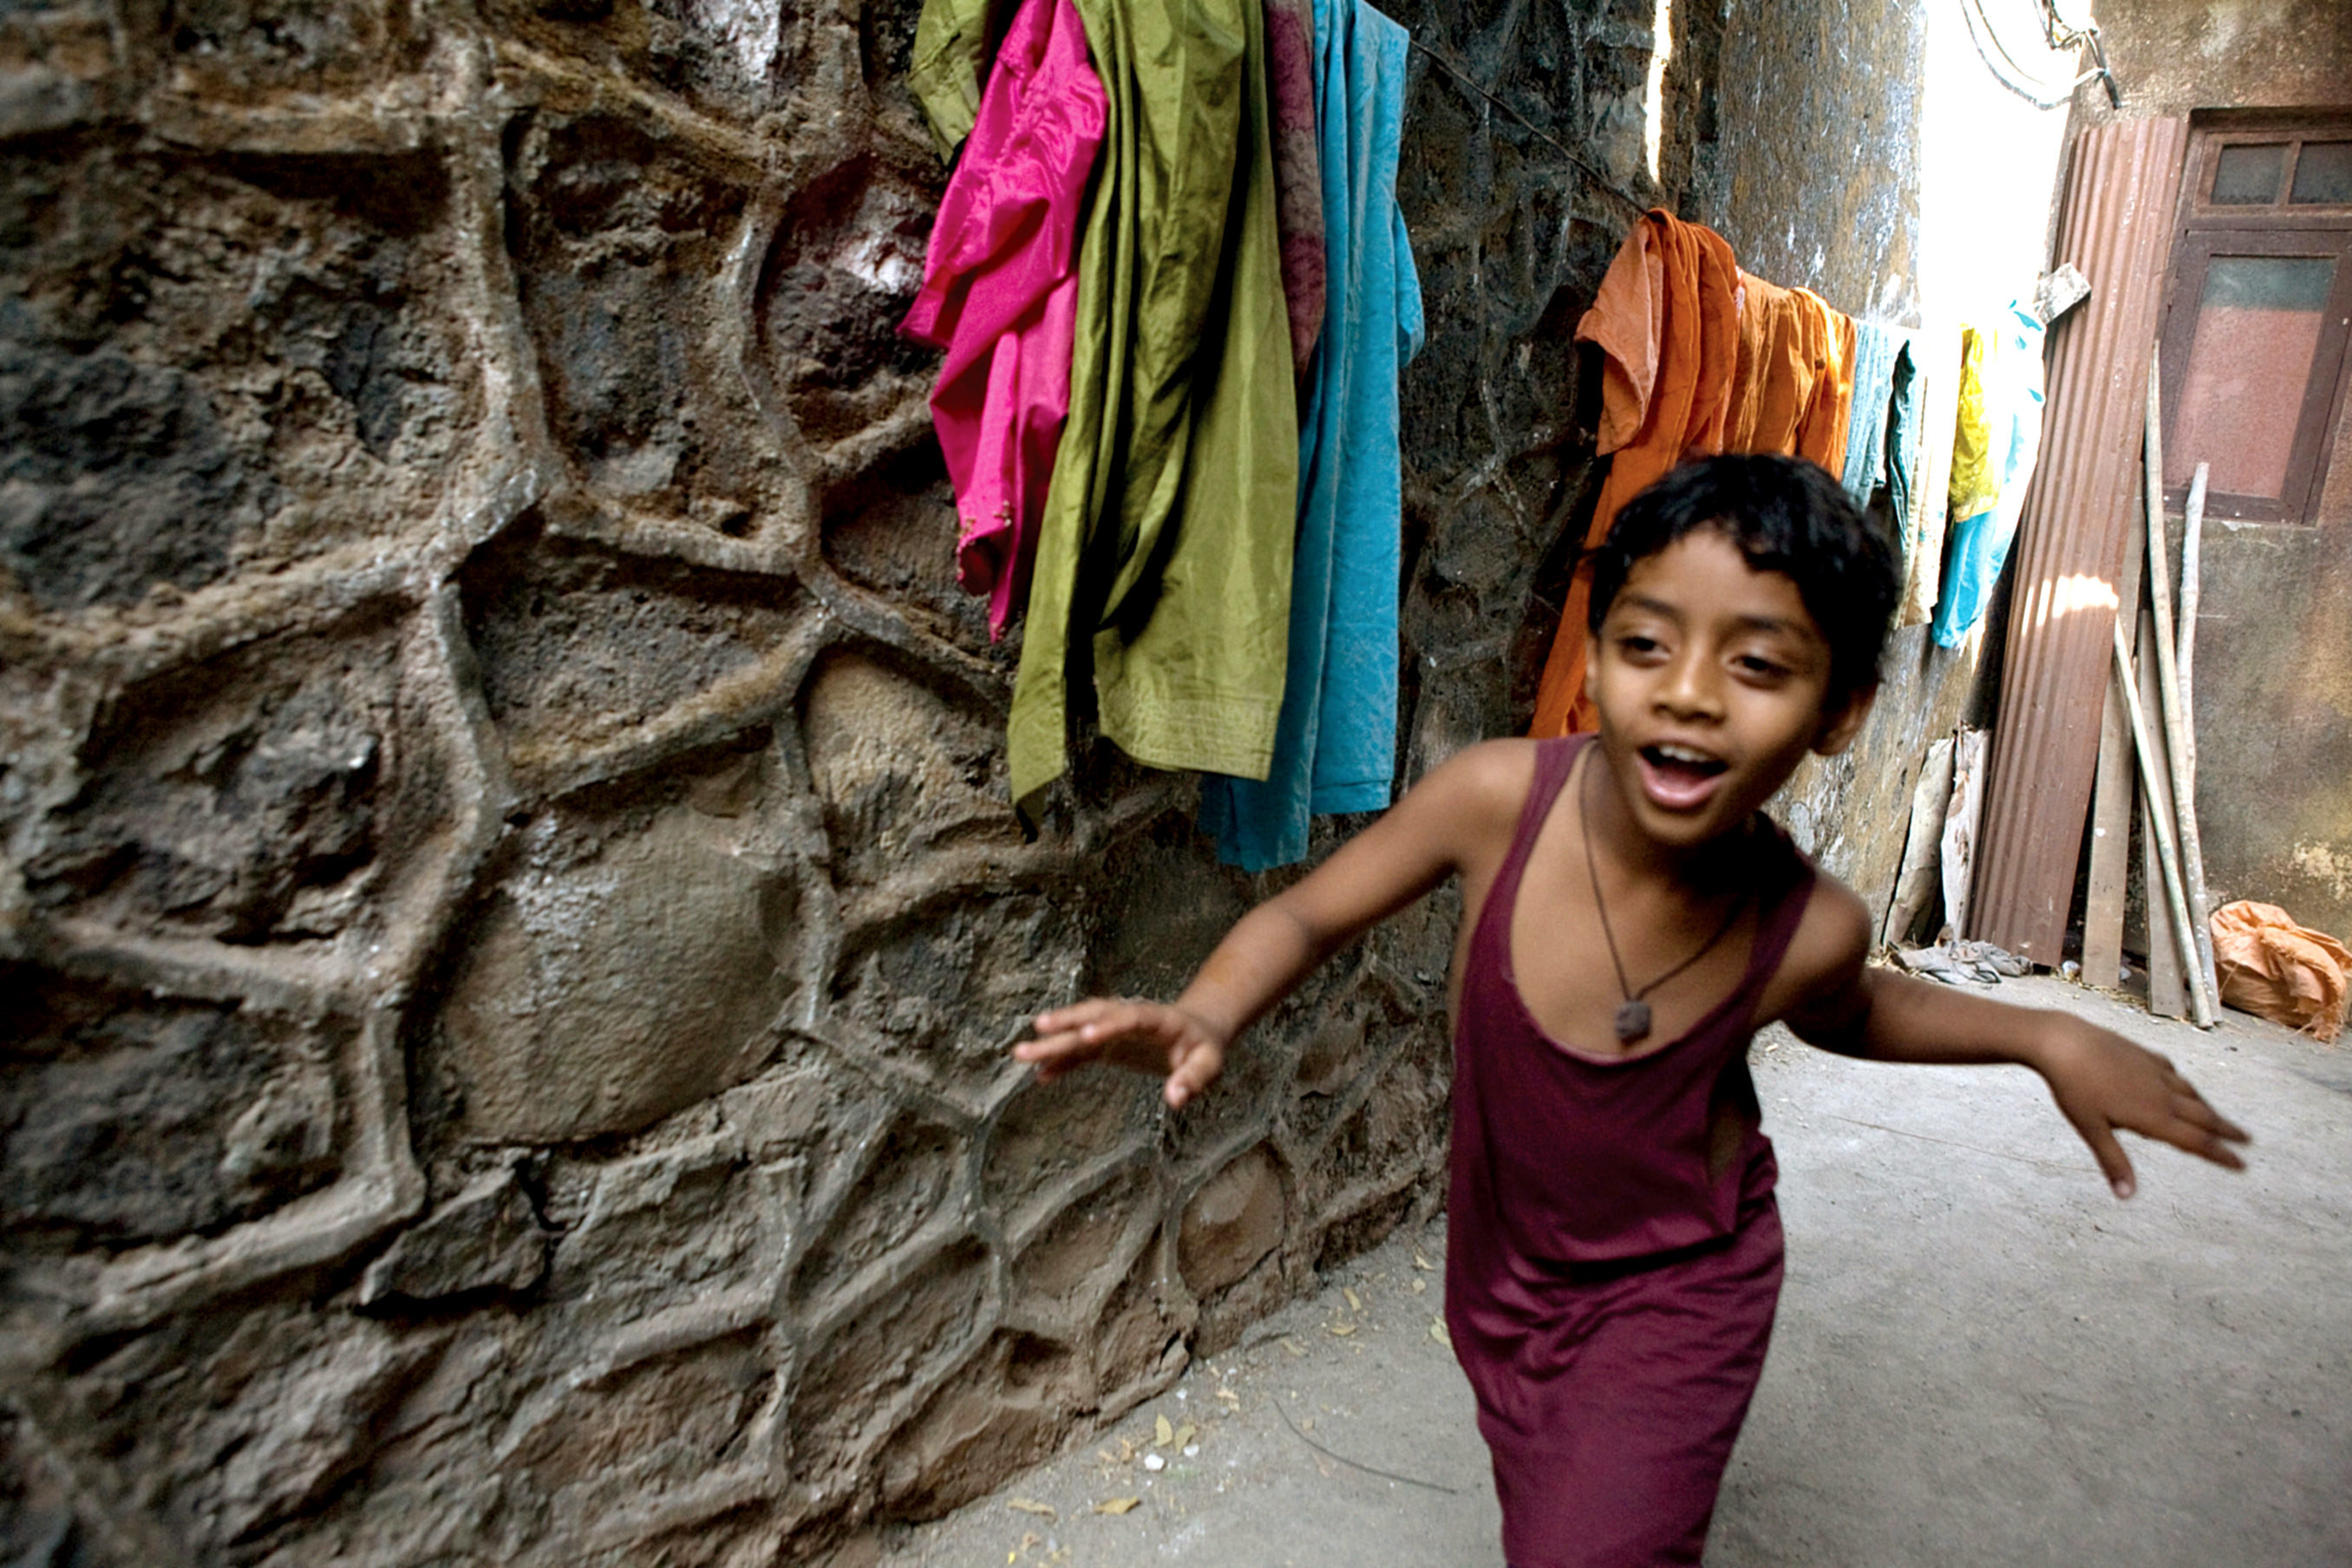 young Salim dances past colorful laundry